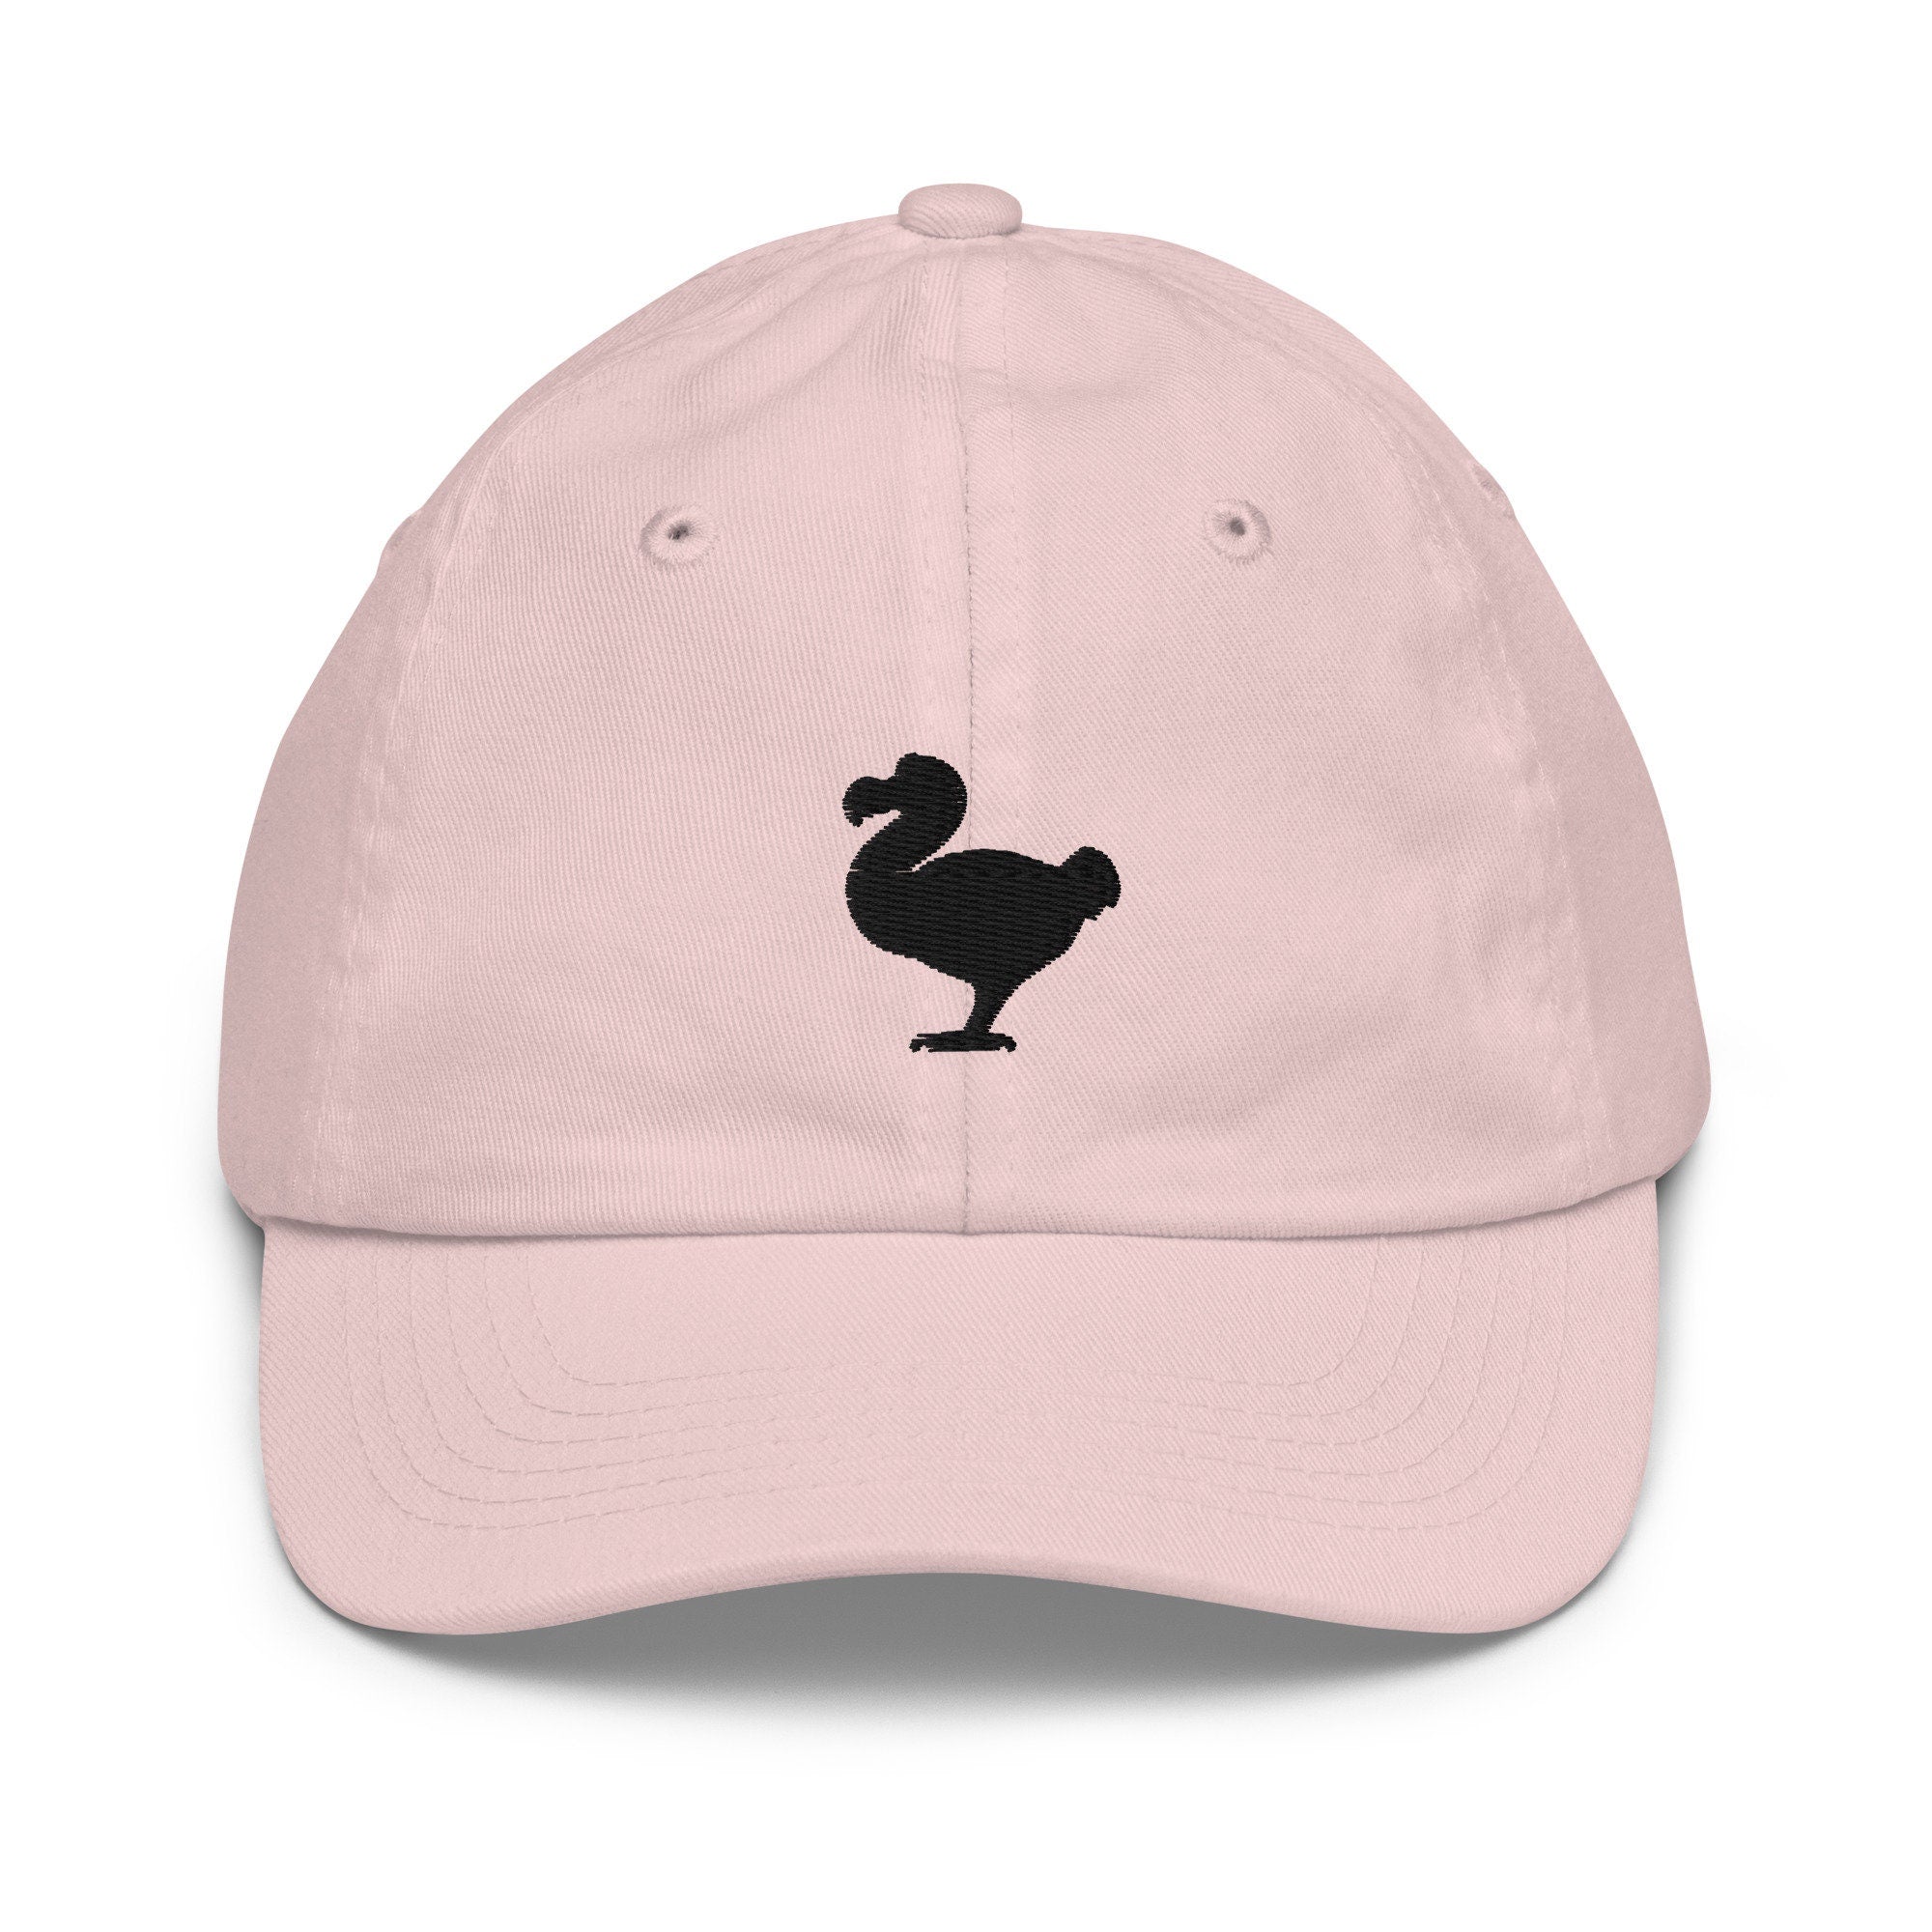 Dodo Bird Youth Baseball Cap, Handmade Kids Hat, Embroidered Childrens Hat Gift - Multiple Colors